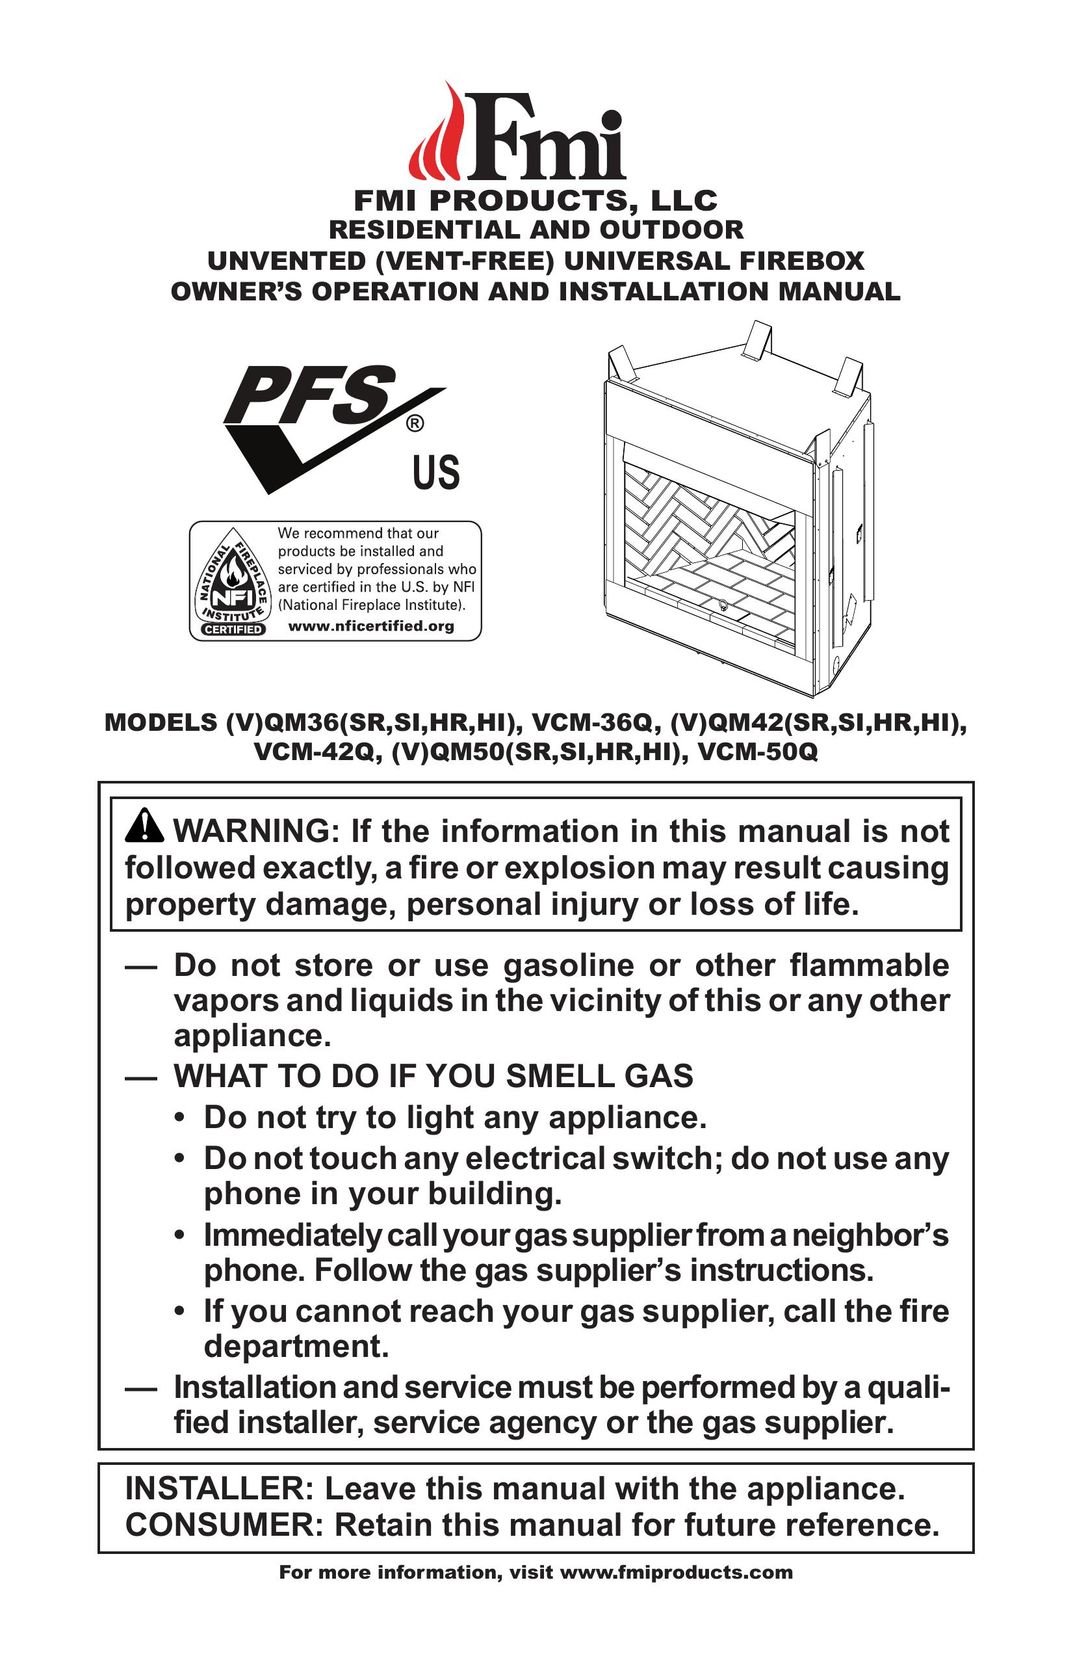 FMI (V)QM42(SR,SI,HR,HI) Indoor Fireplace User Manual